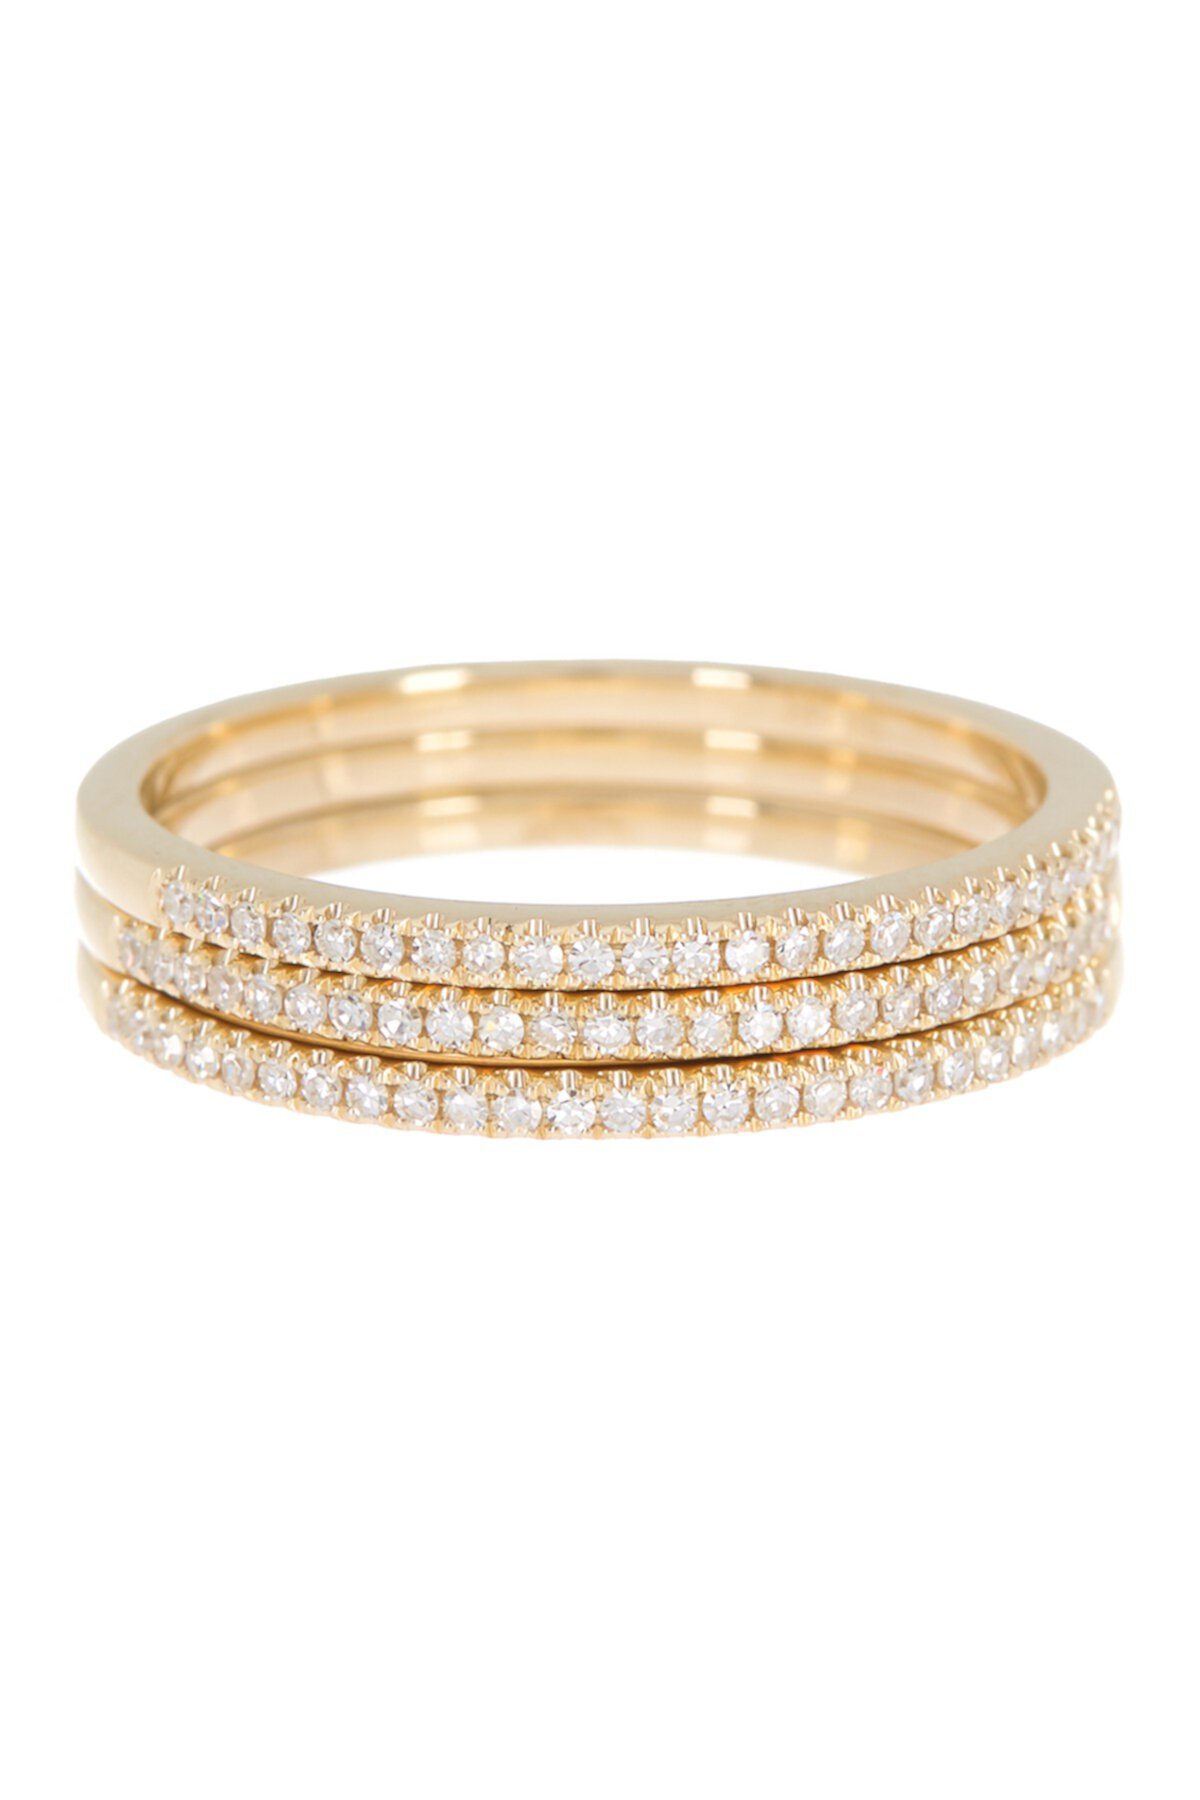 14K Yellow Gold Diamond Band Ring - Set of 3 - 0.24 ctw Ron Hami